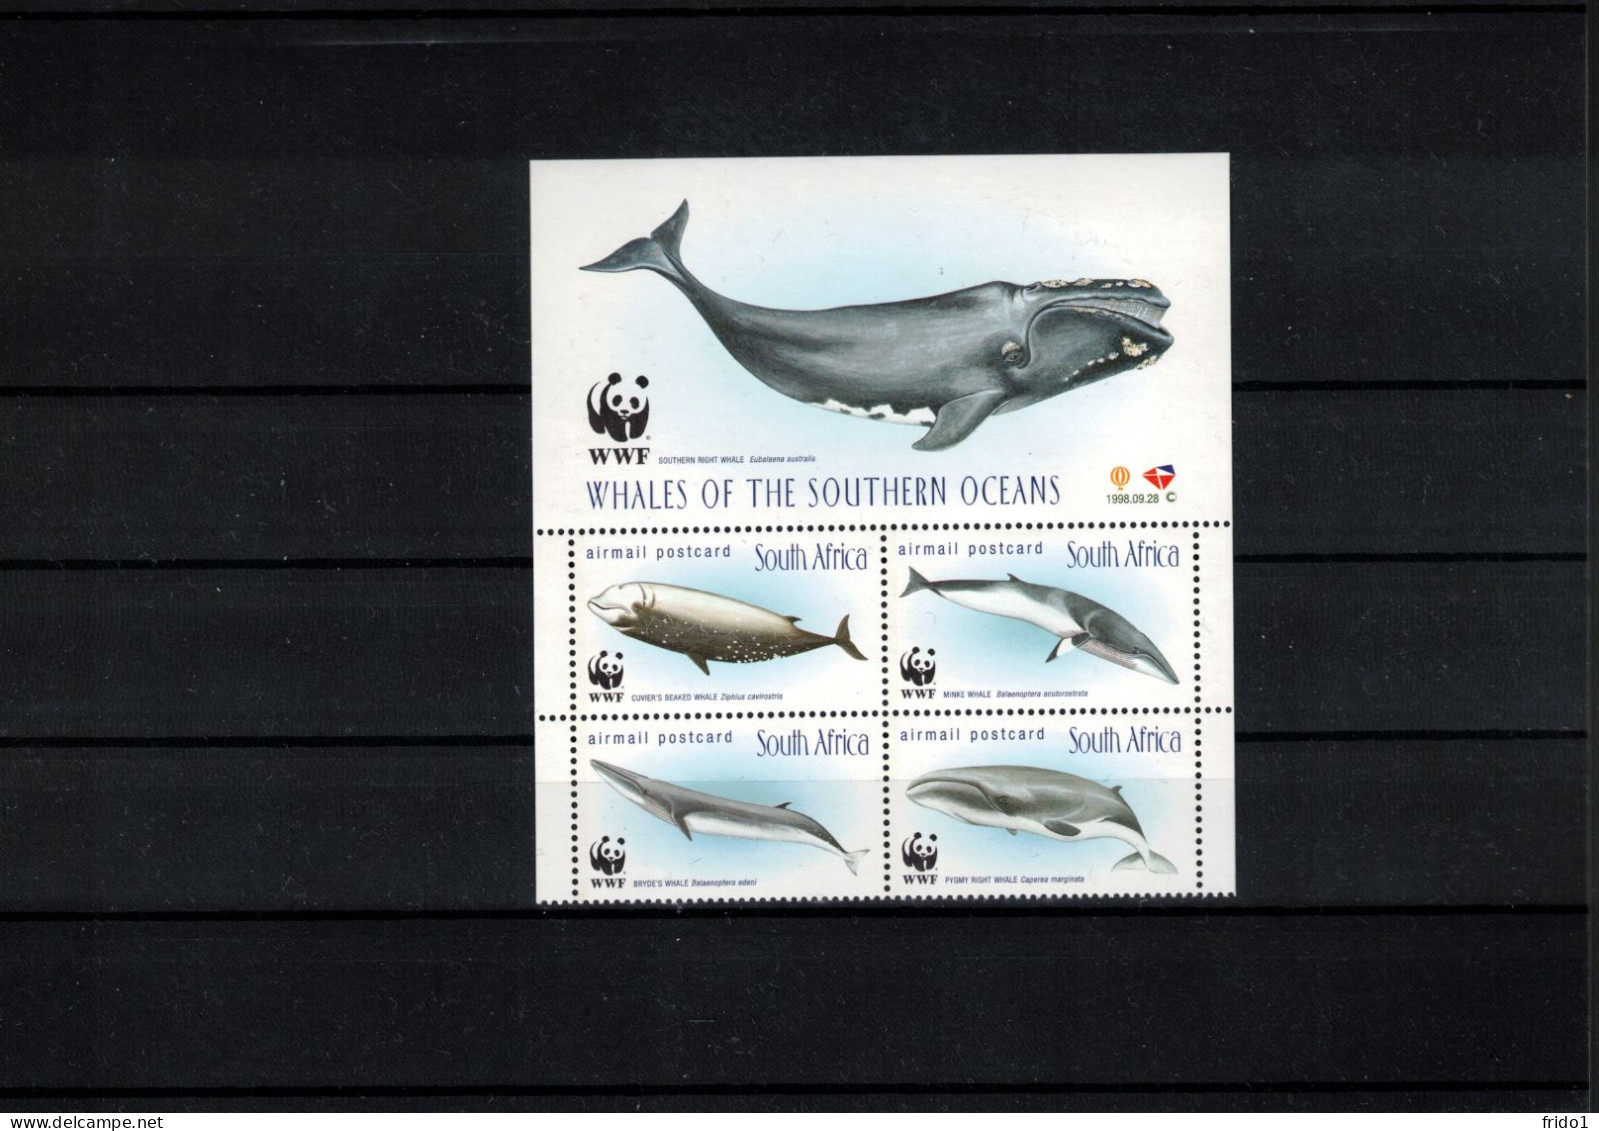 South Africa 1998 Whales WWF Postfrisch / MNH - Ballenas